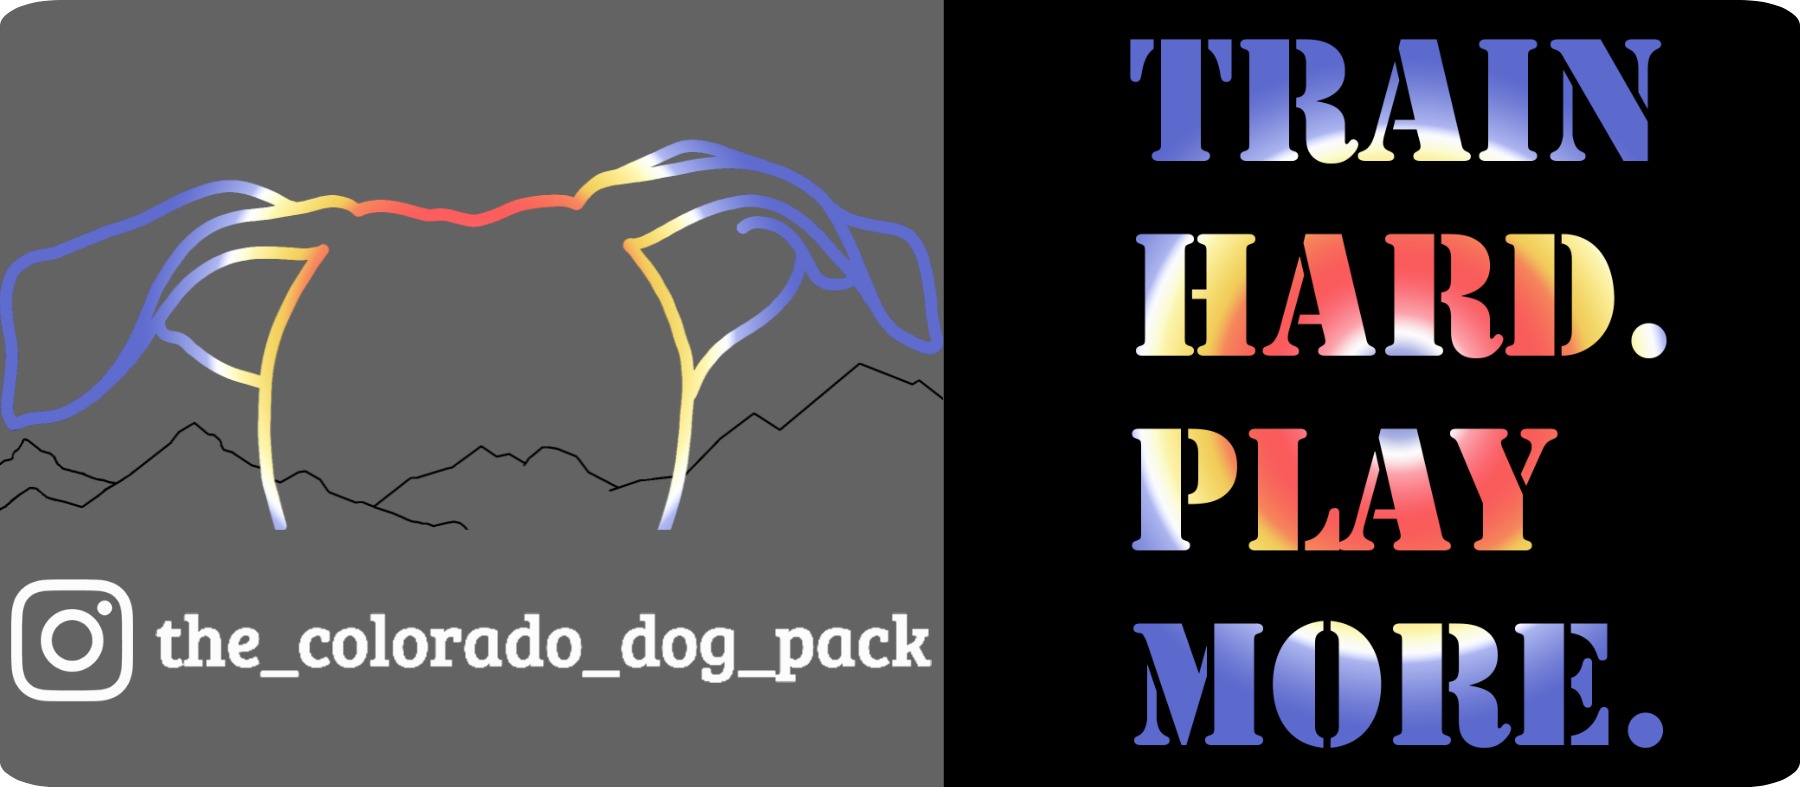 The Colorado Dog Pack